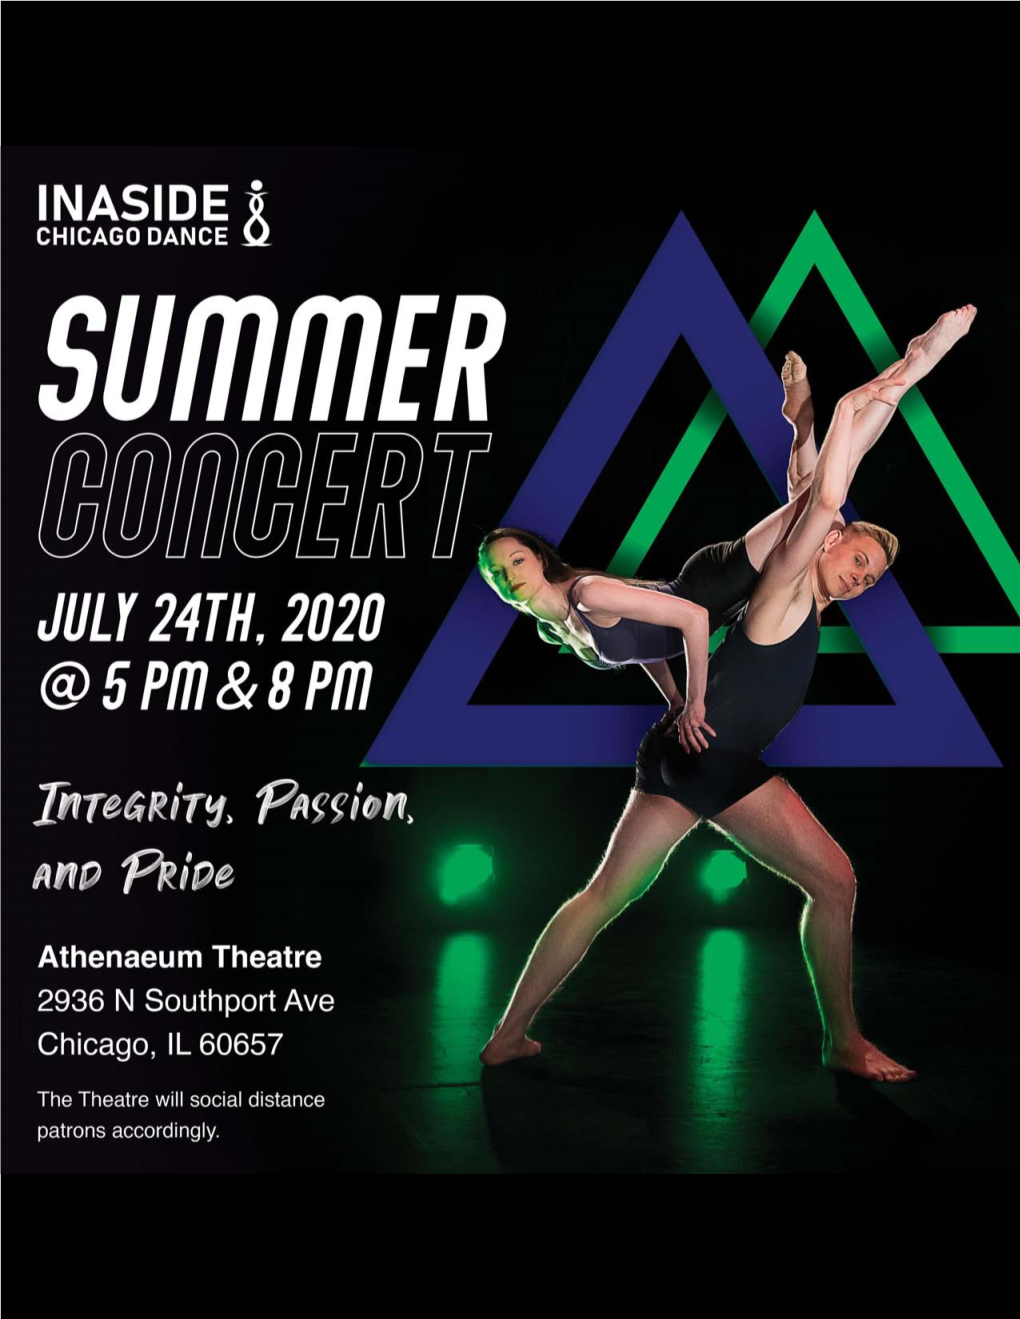 Summer Concert 2020 Program